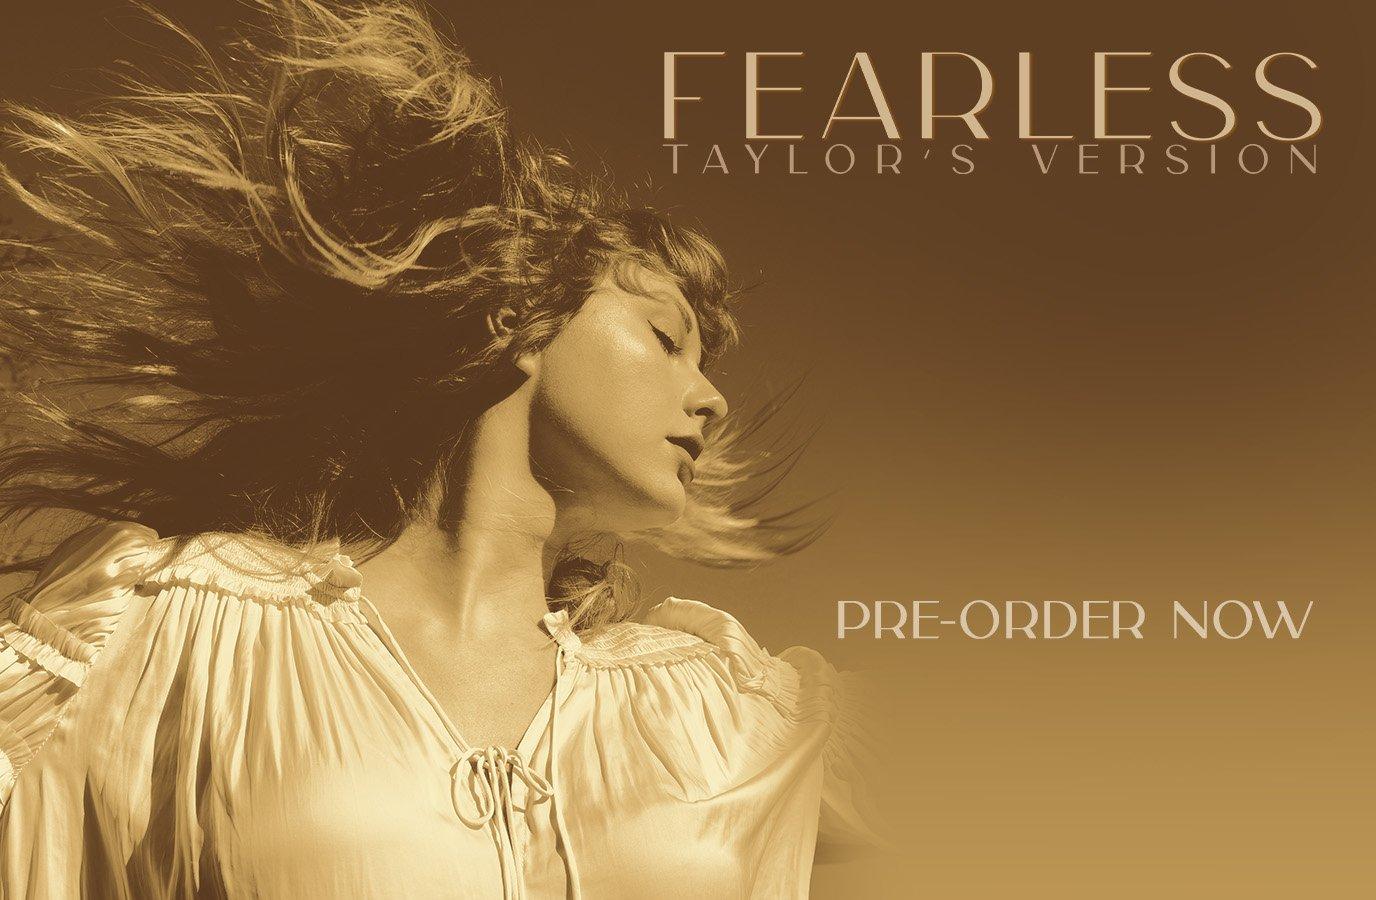 Fearless (Taylor's version) ra mắt vào t4/2021 (Nguồn: Internet)